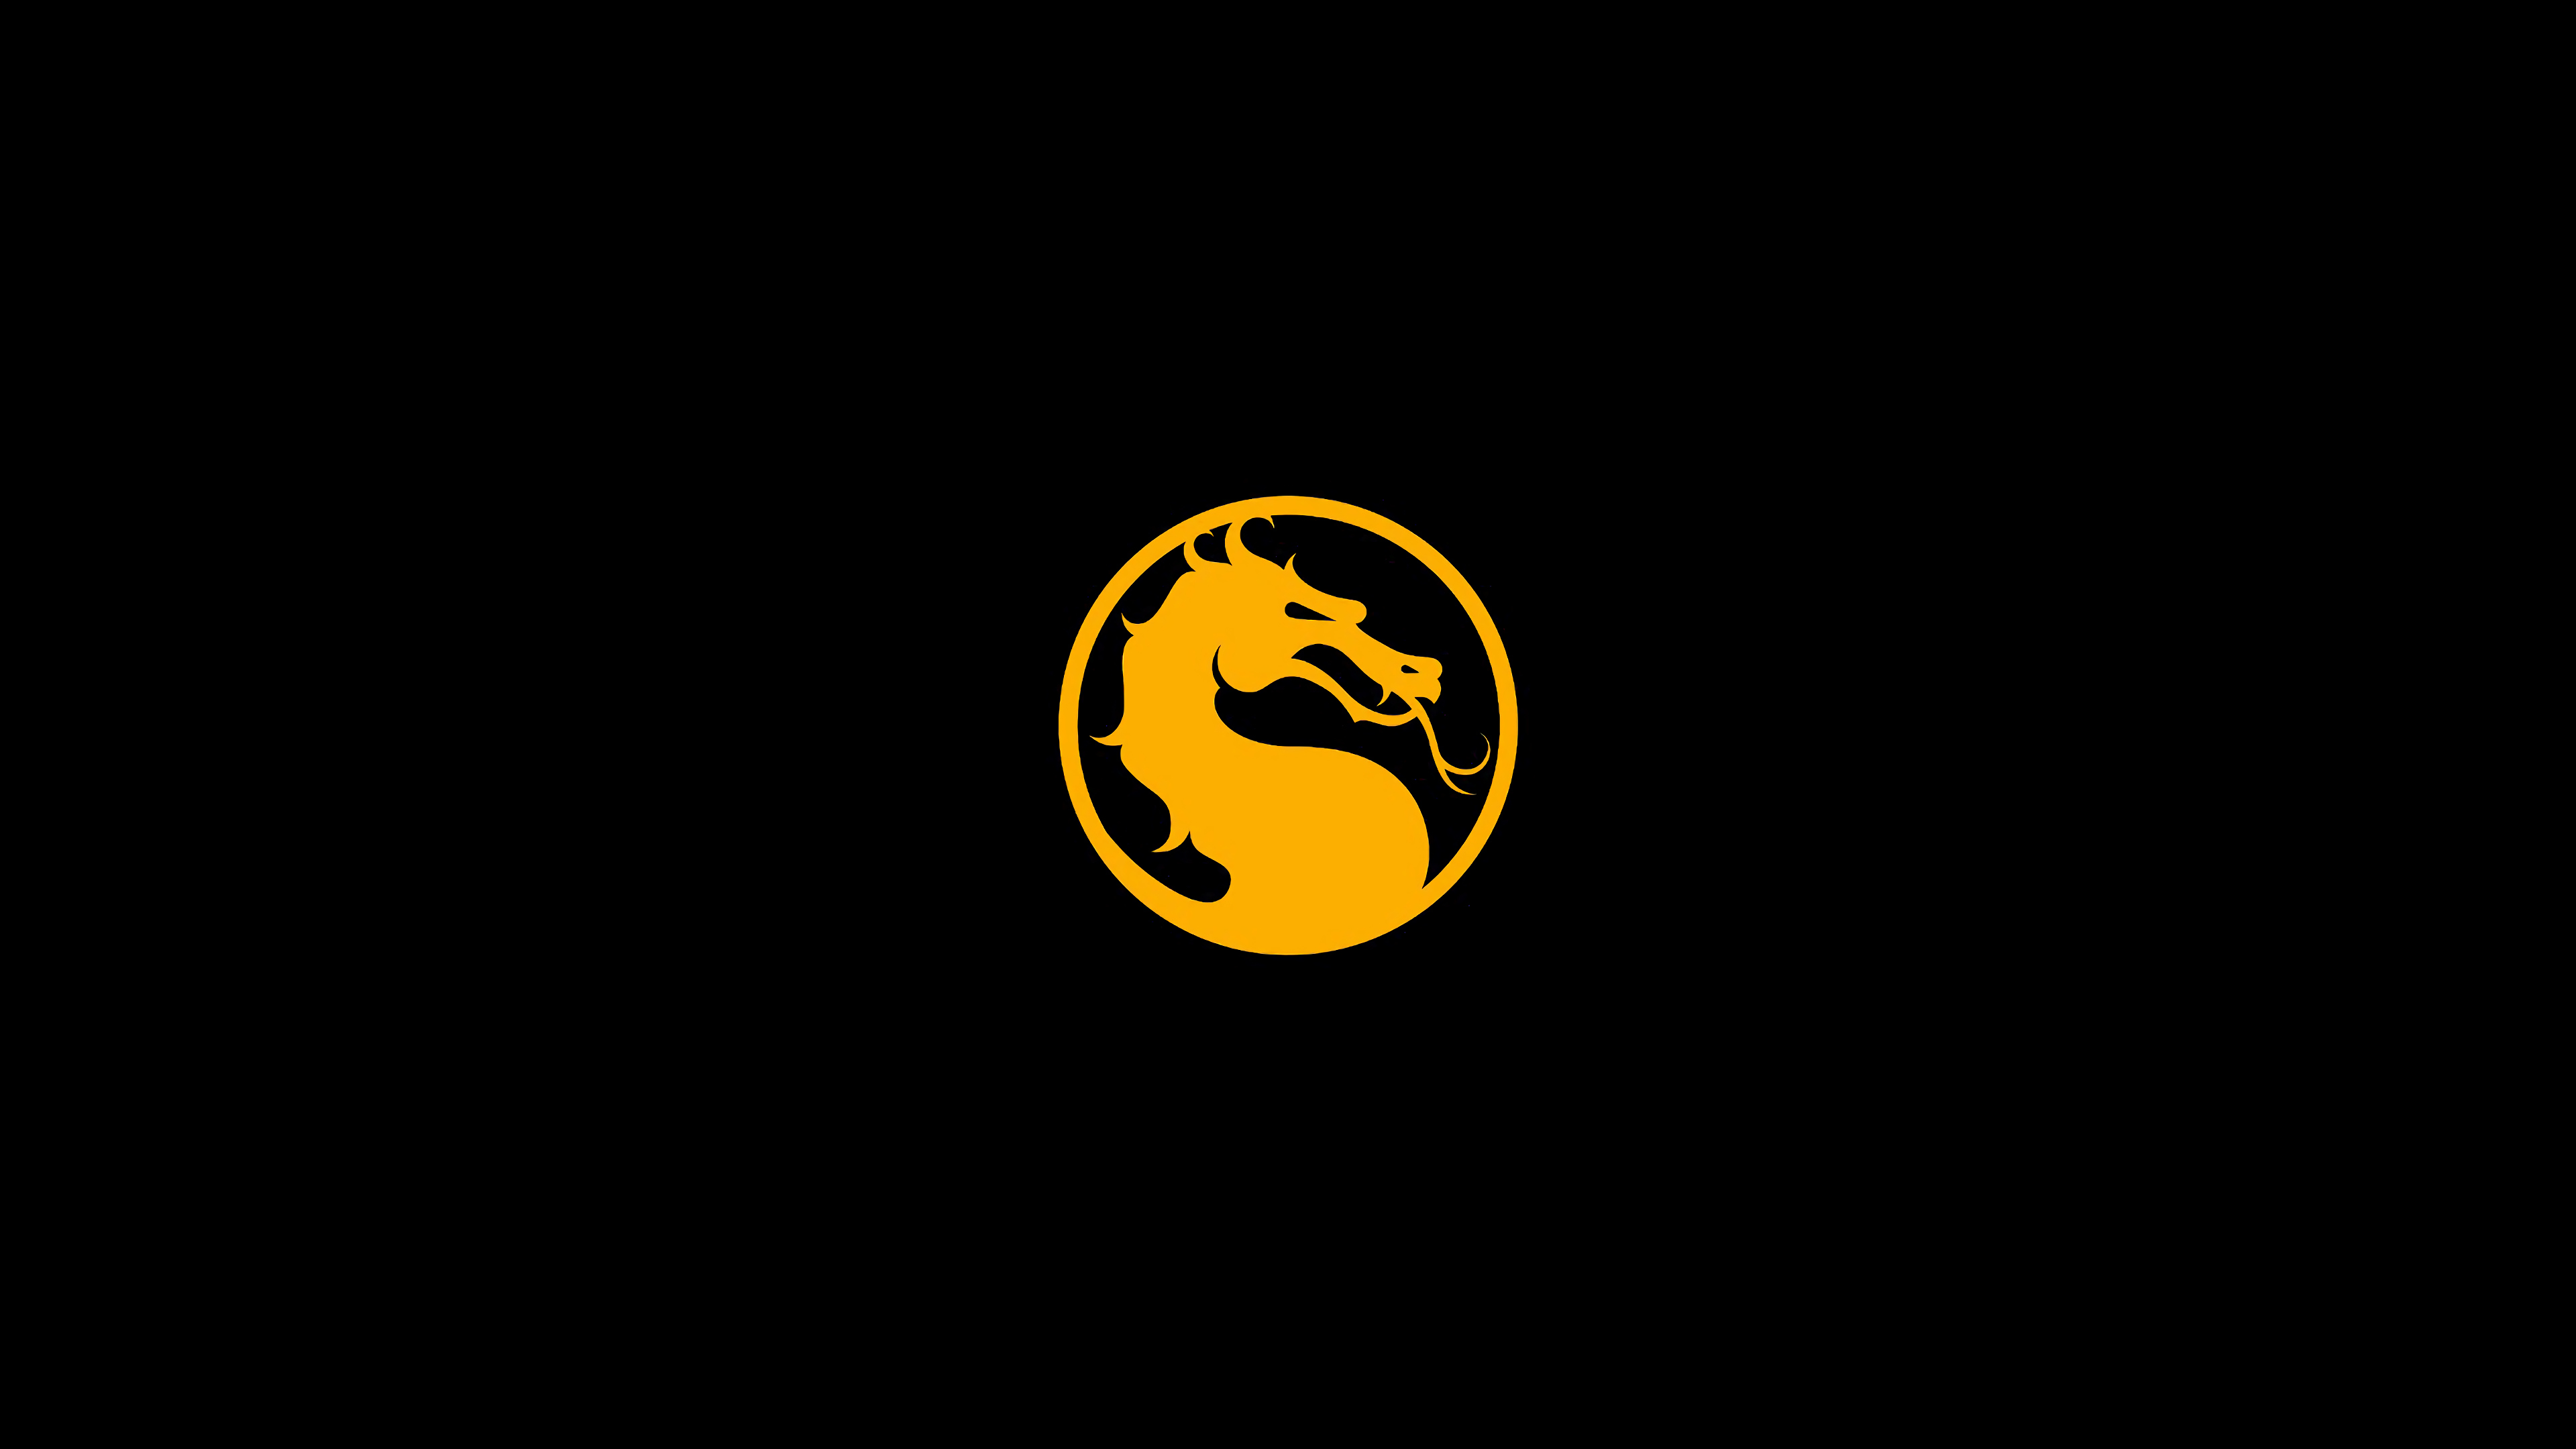 Mortal Kombat 11 wallpaper - Logo with the dragon